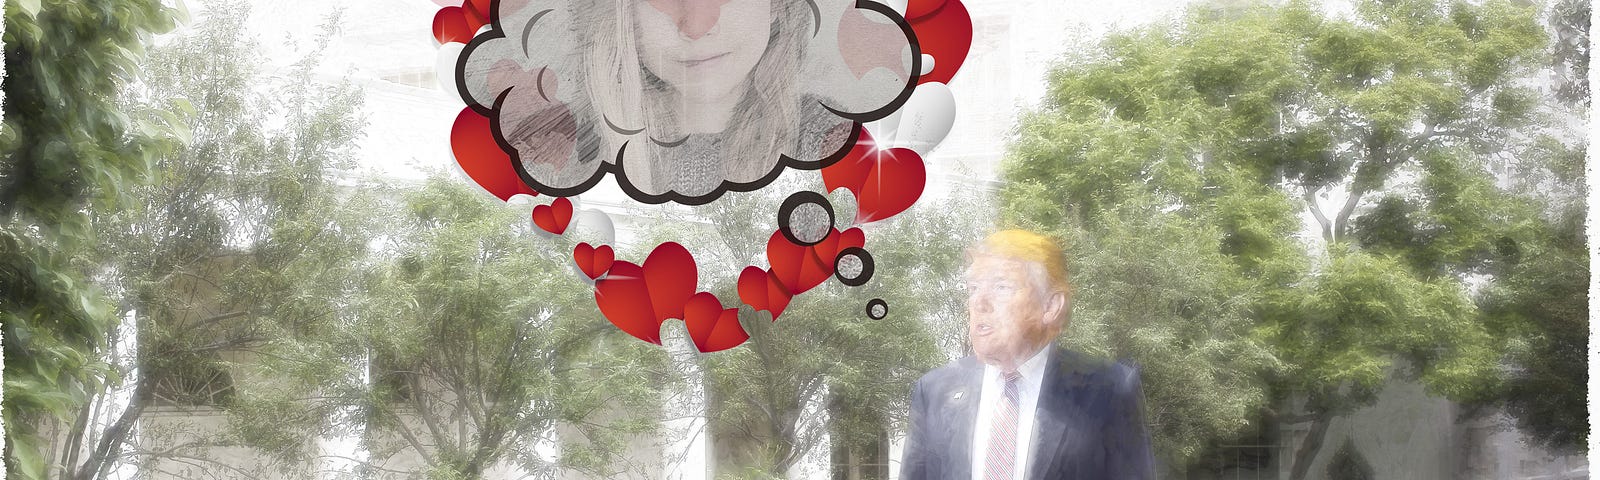 Trump in the Rose Garden dreaming of Naomi Seibt